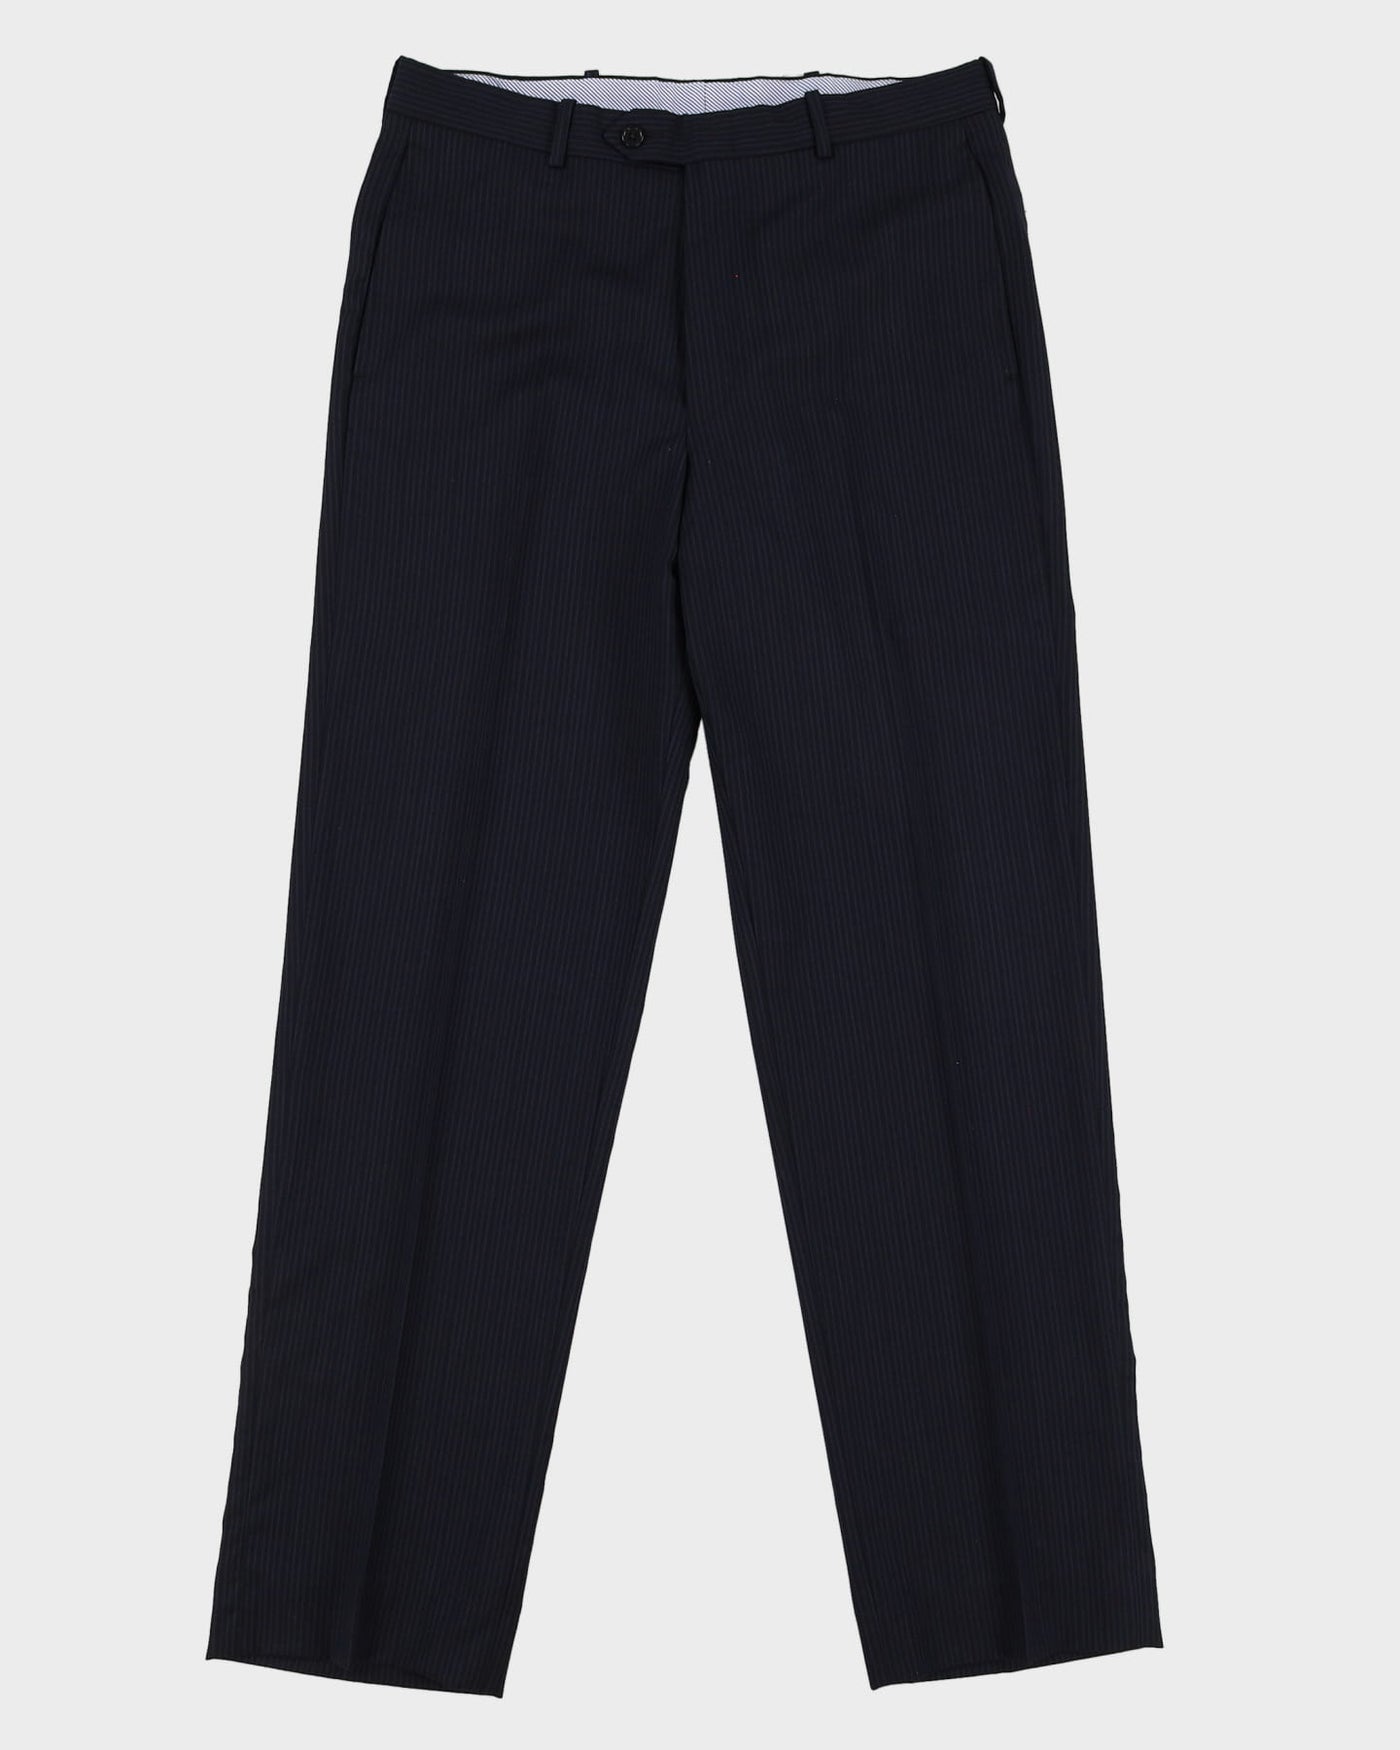 Tommy Hilfiger Navy Pinstripe Suit - CH38 W34